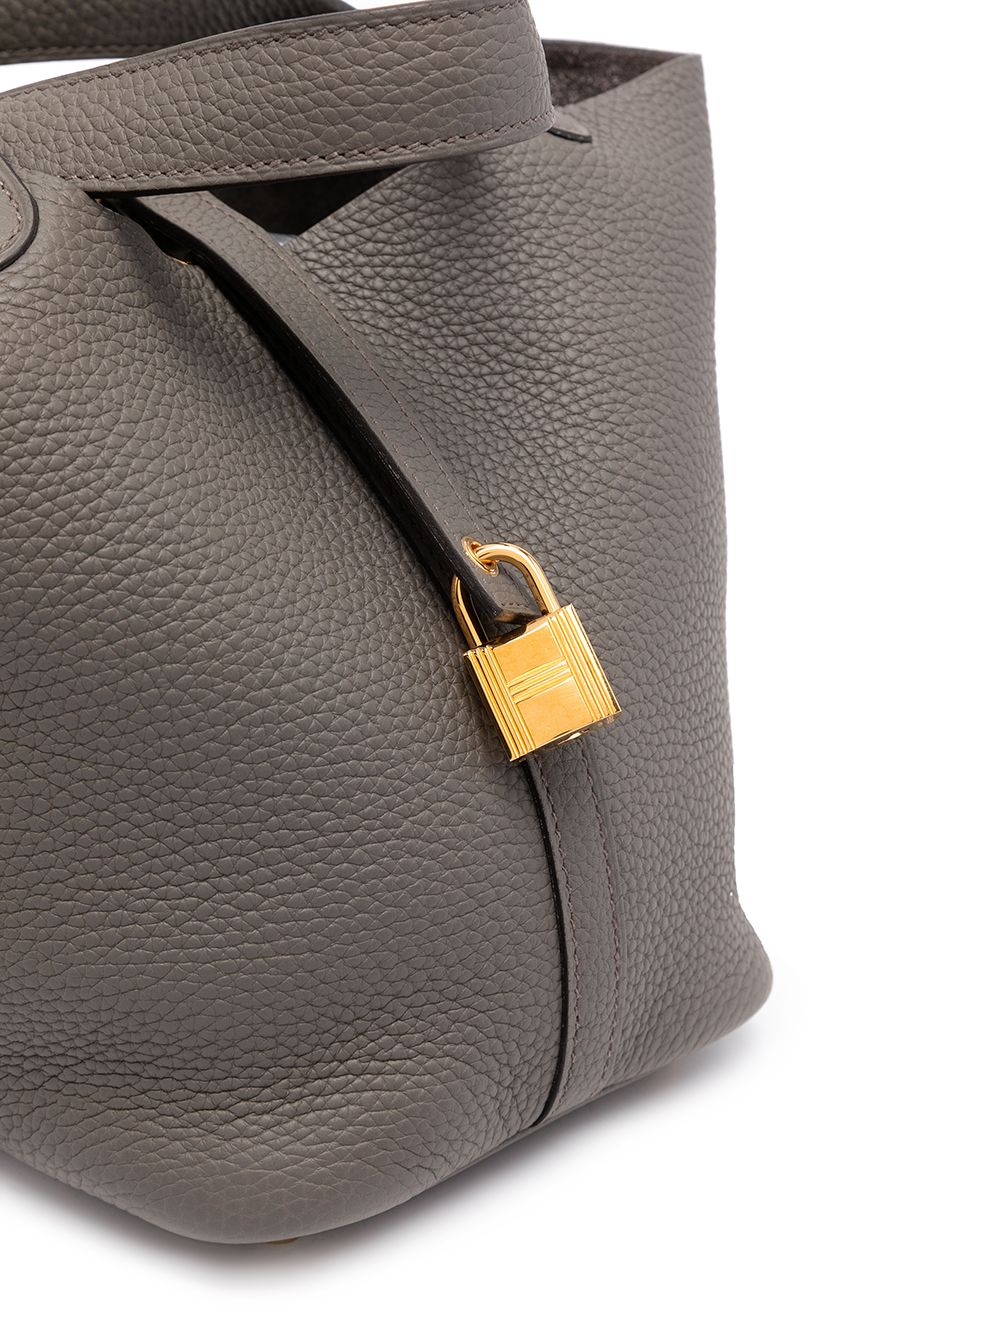 Hermès Picotin, Picotin Lock Bags For Sale